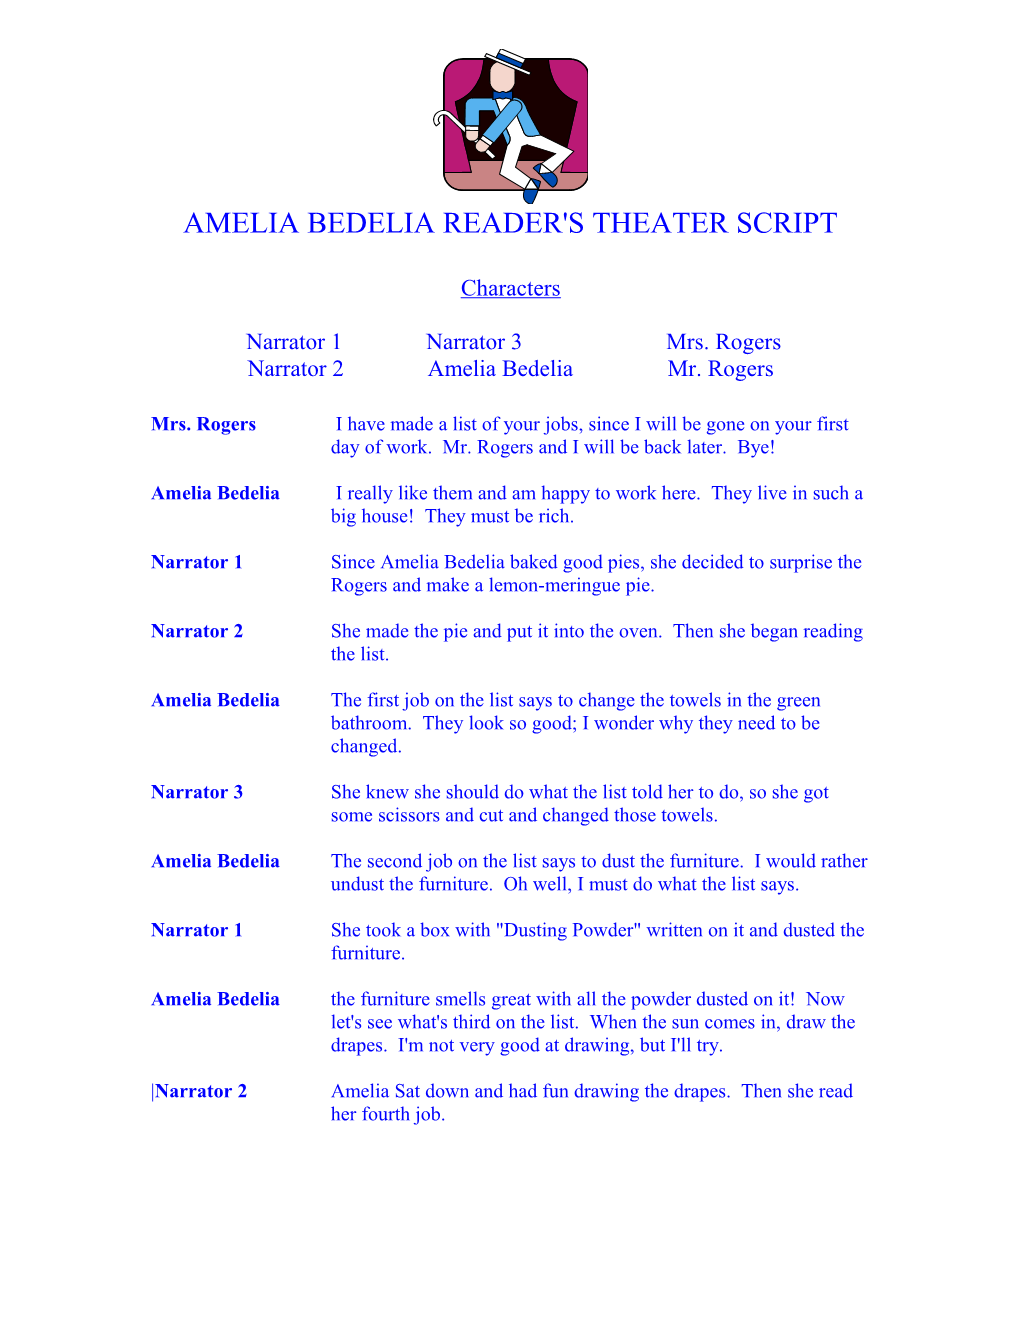 Amelia Bedelia Reader's Theater Script